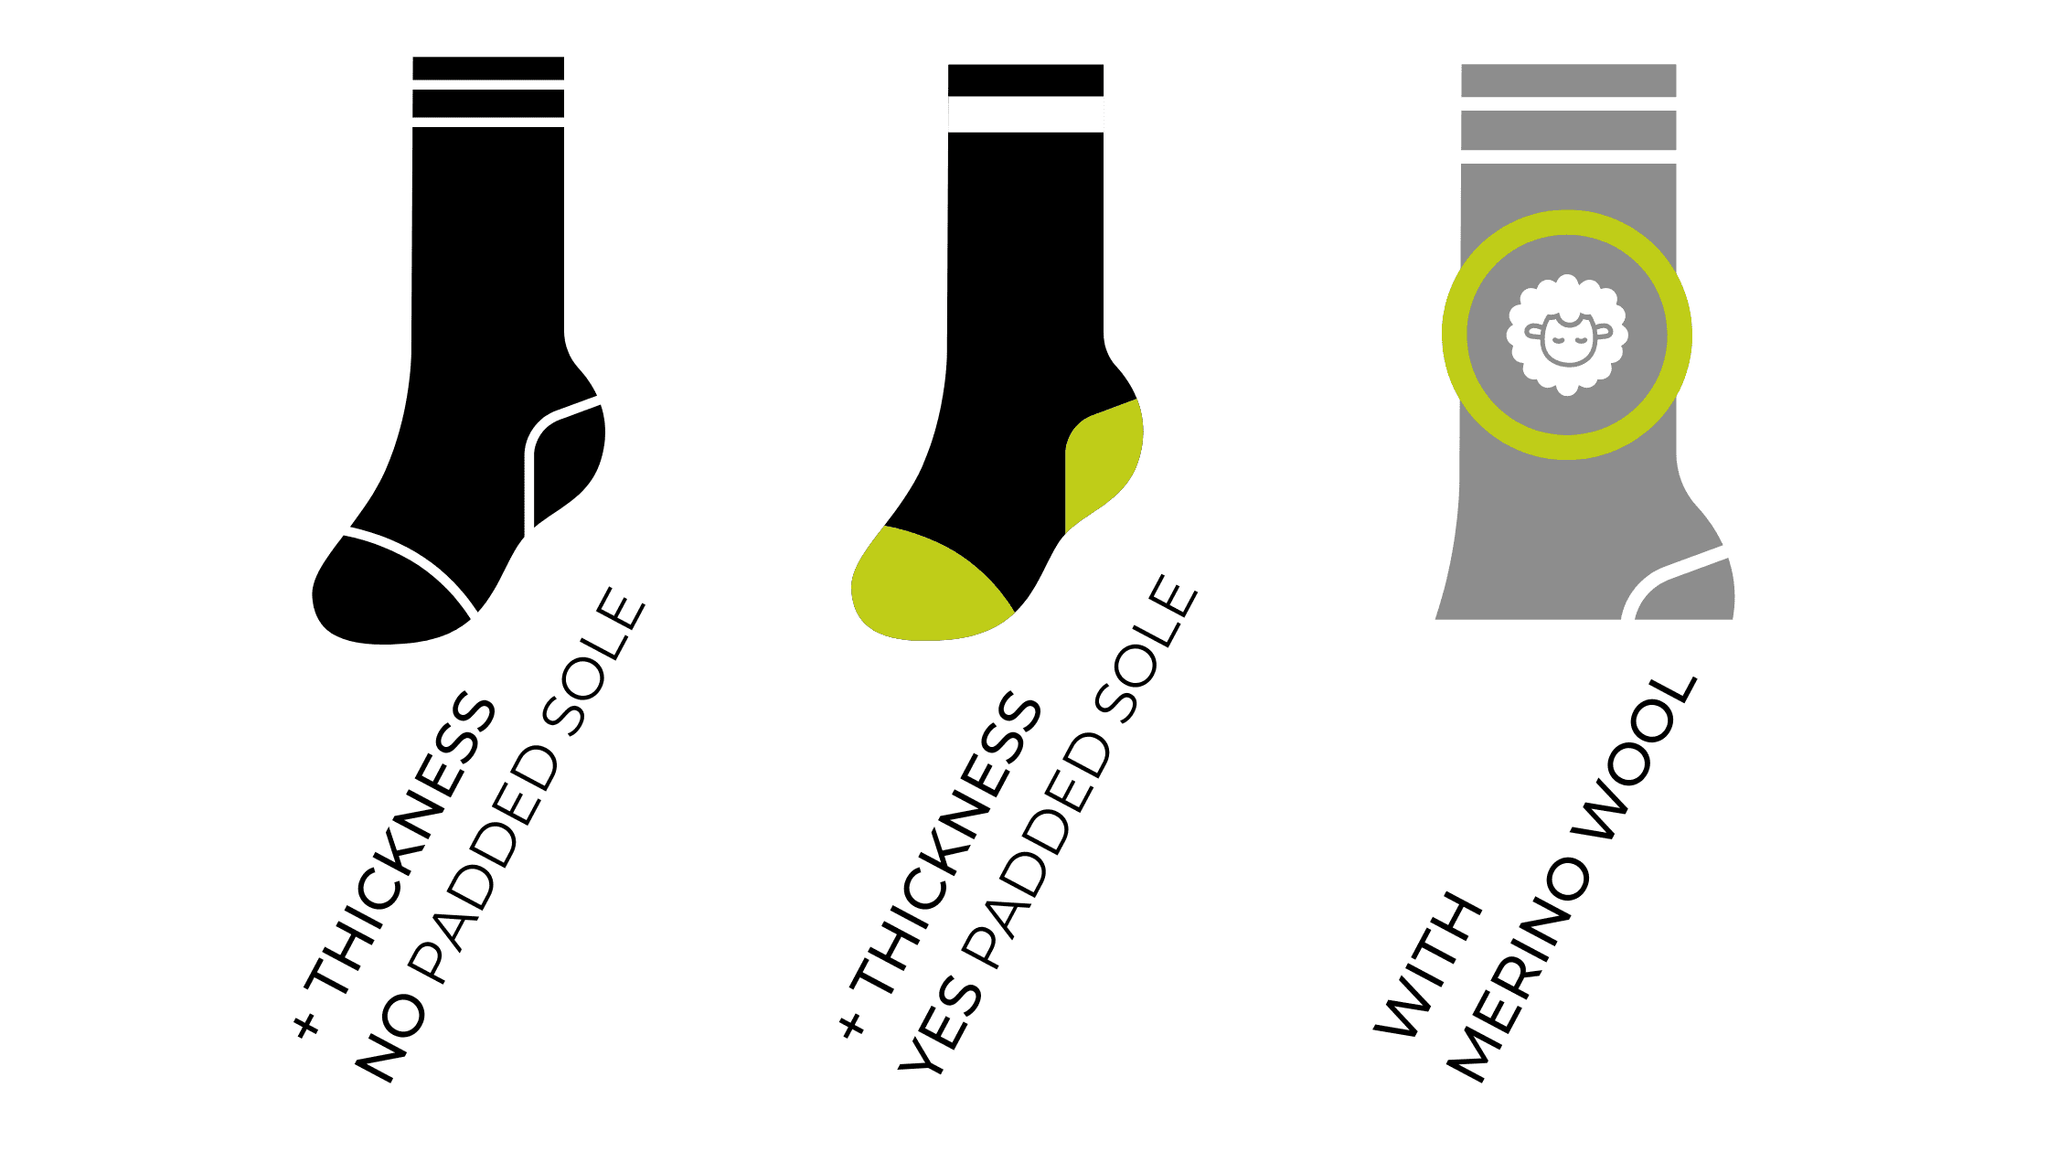 Max Cushion Hiking Merino Mid-cut Socks | Compression Care